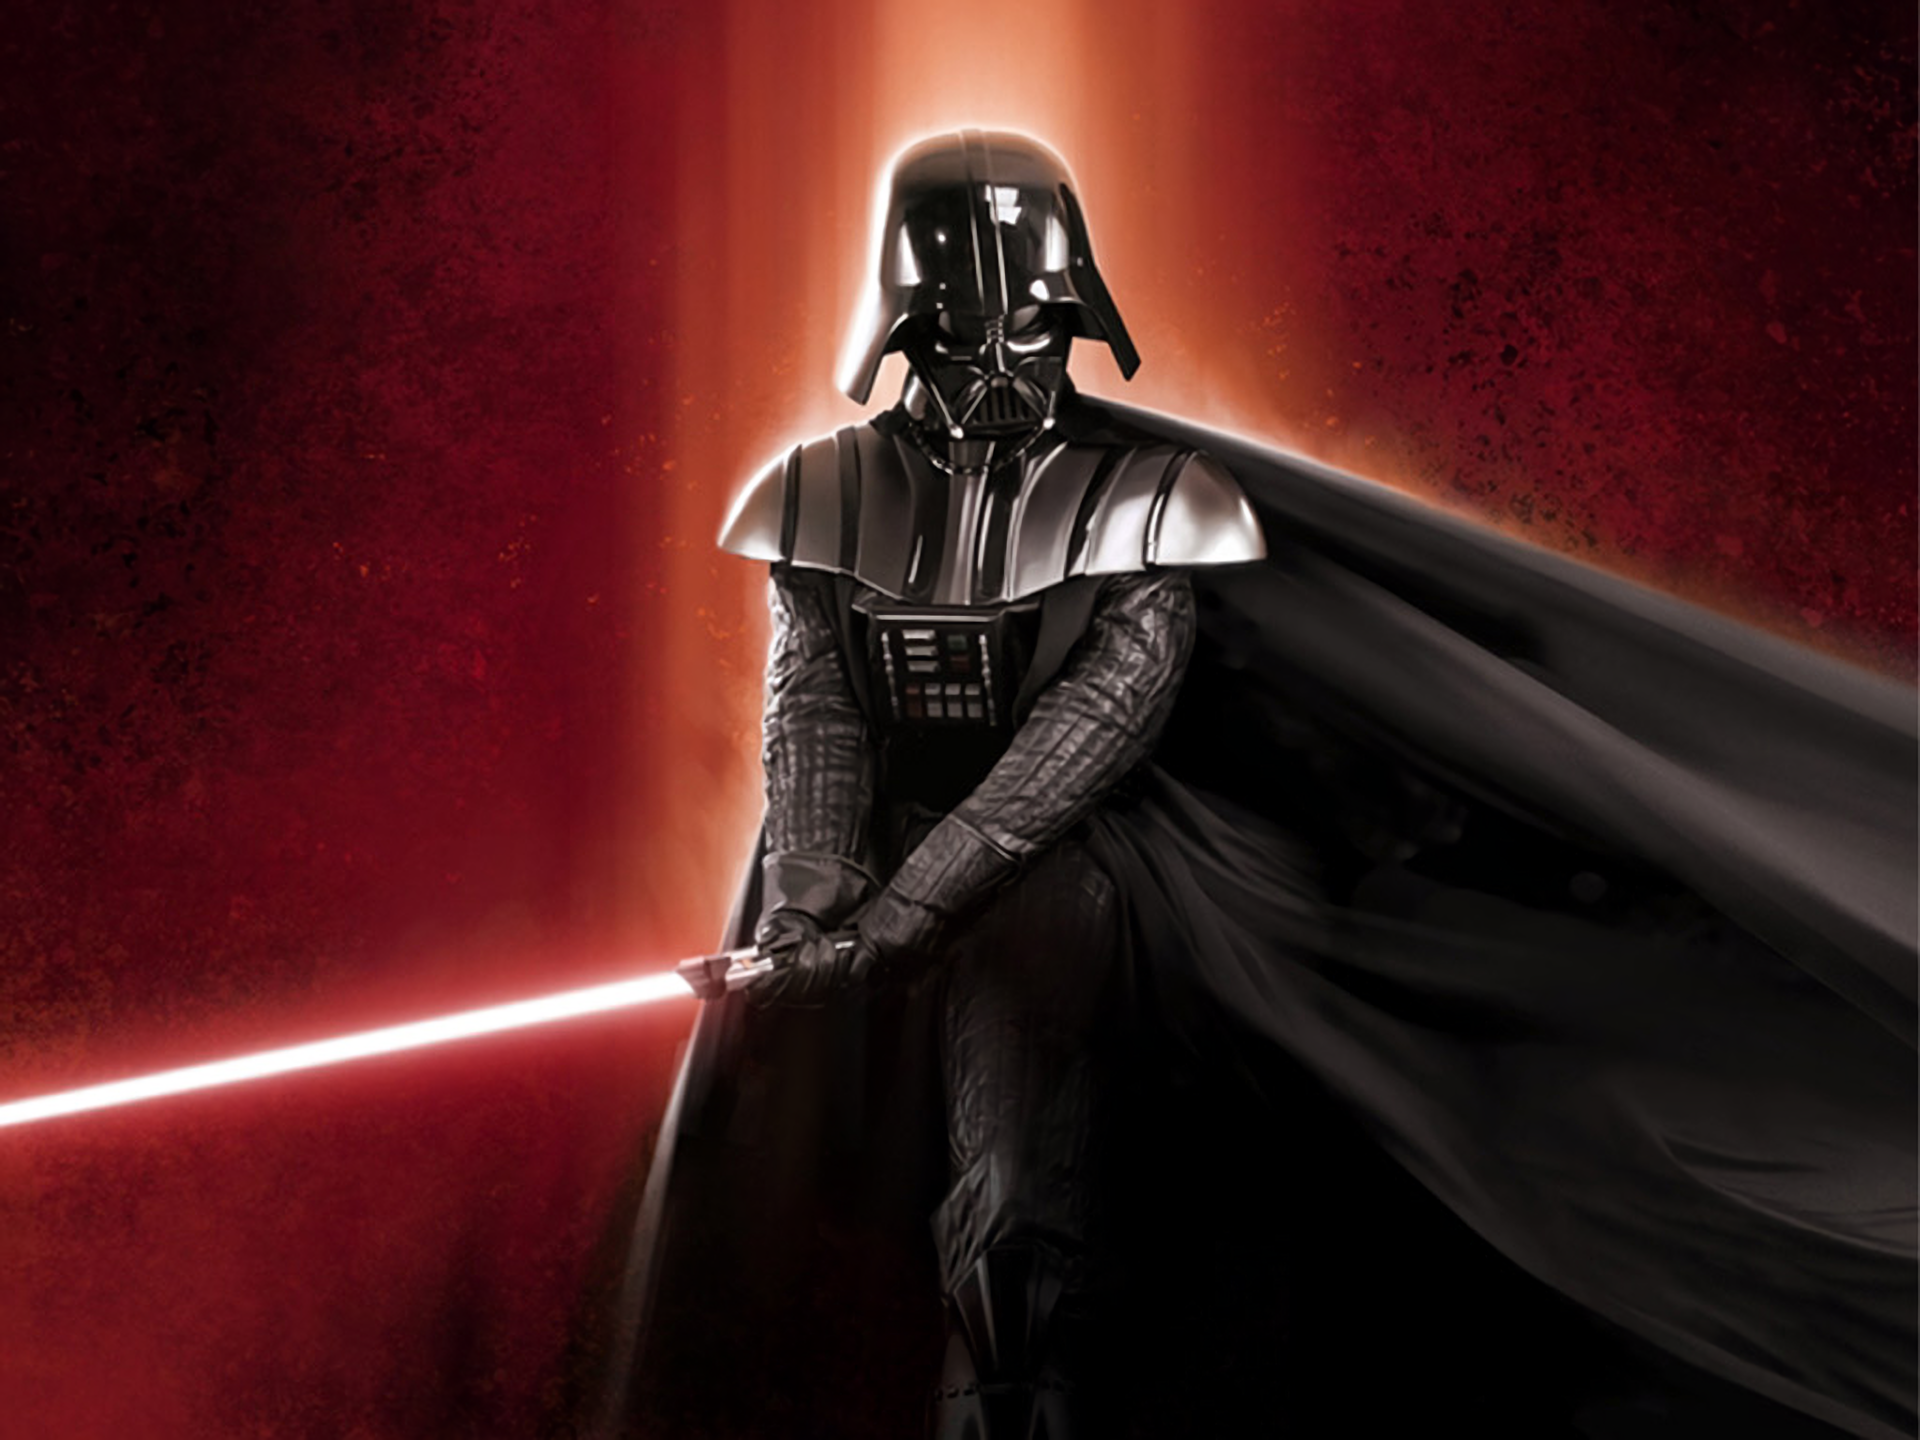 Darth Vader in full gear: black helmet, flowing cape, holding a red lightsaber.